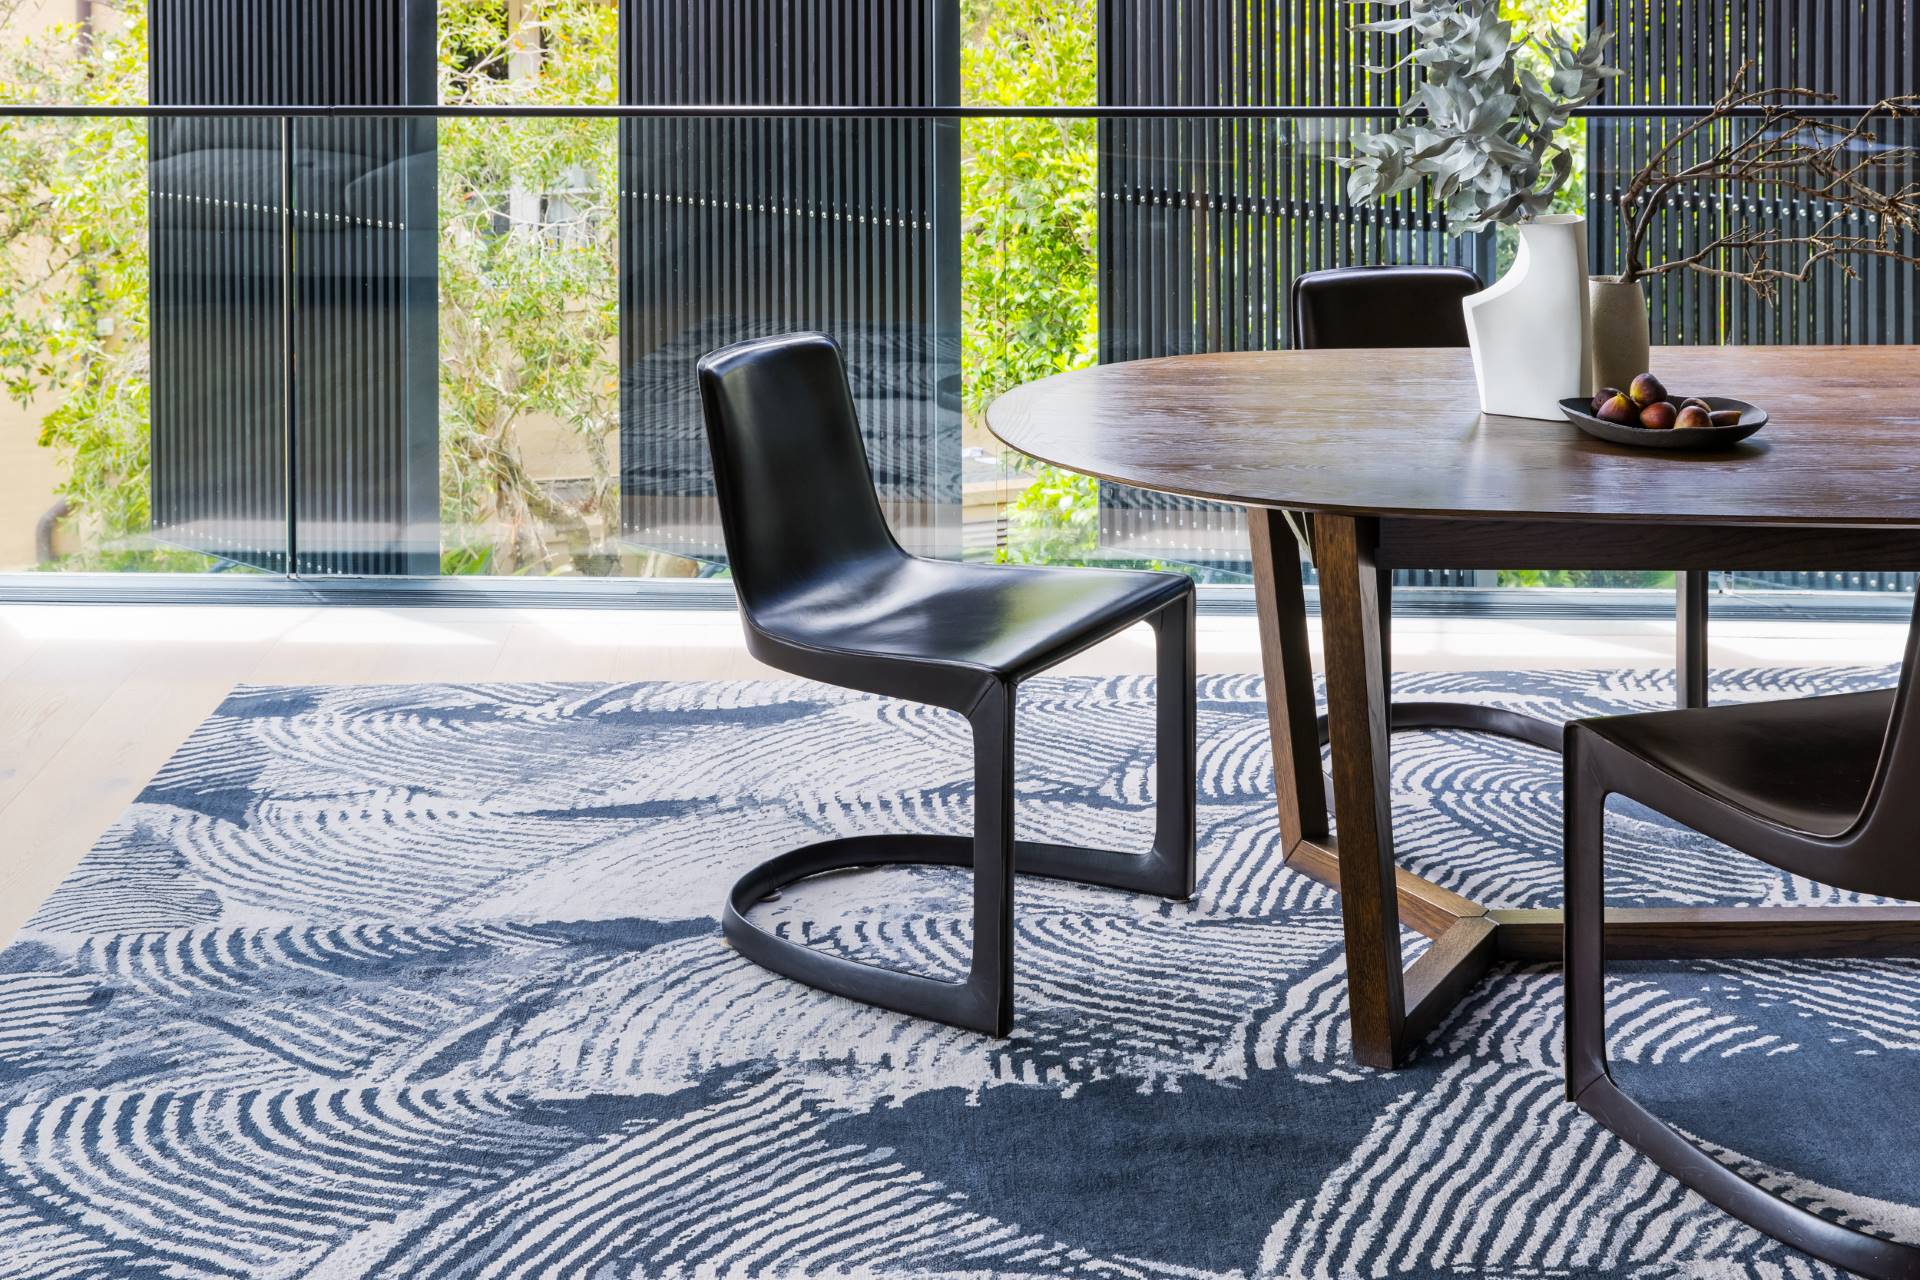 designer rugs shibori Tassel Fern charcoal Dining new 1